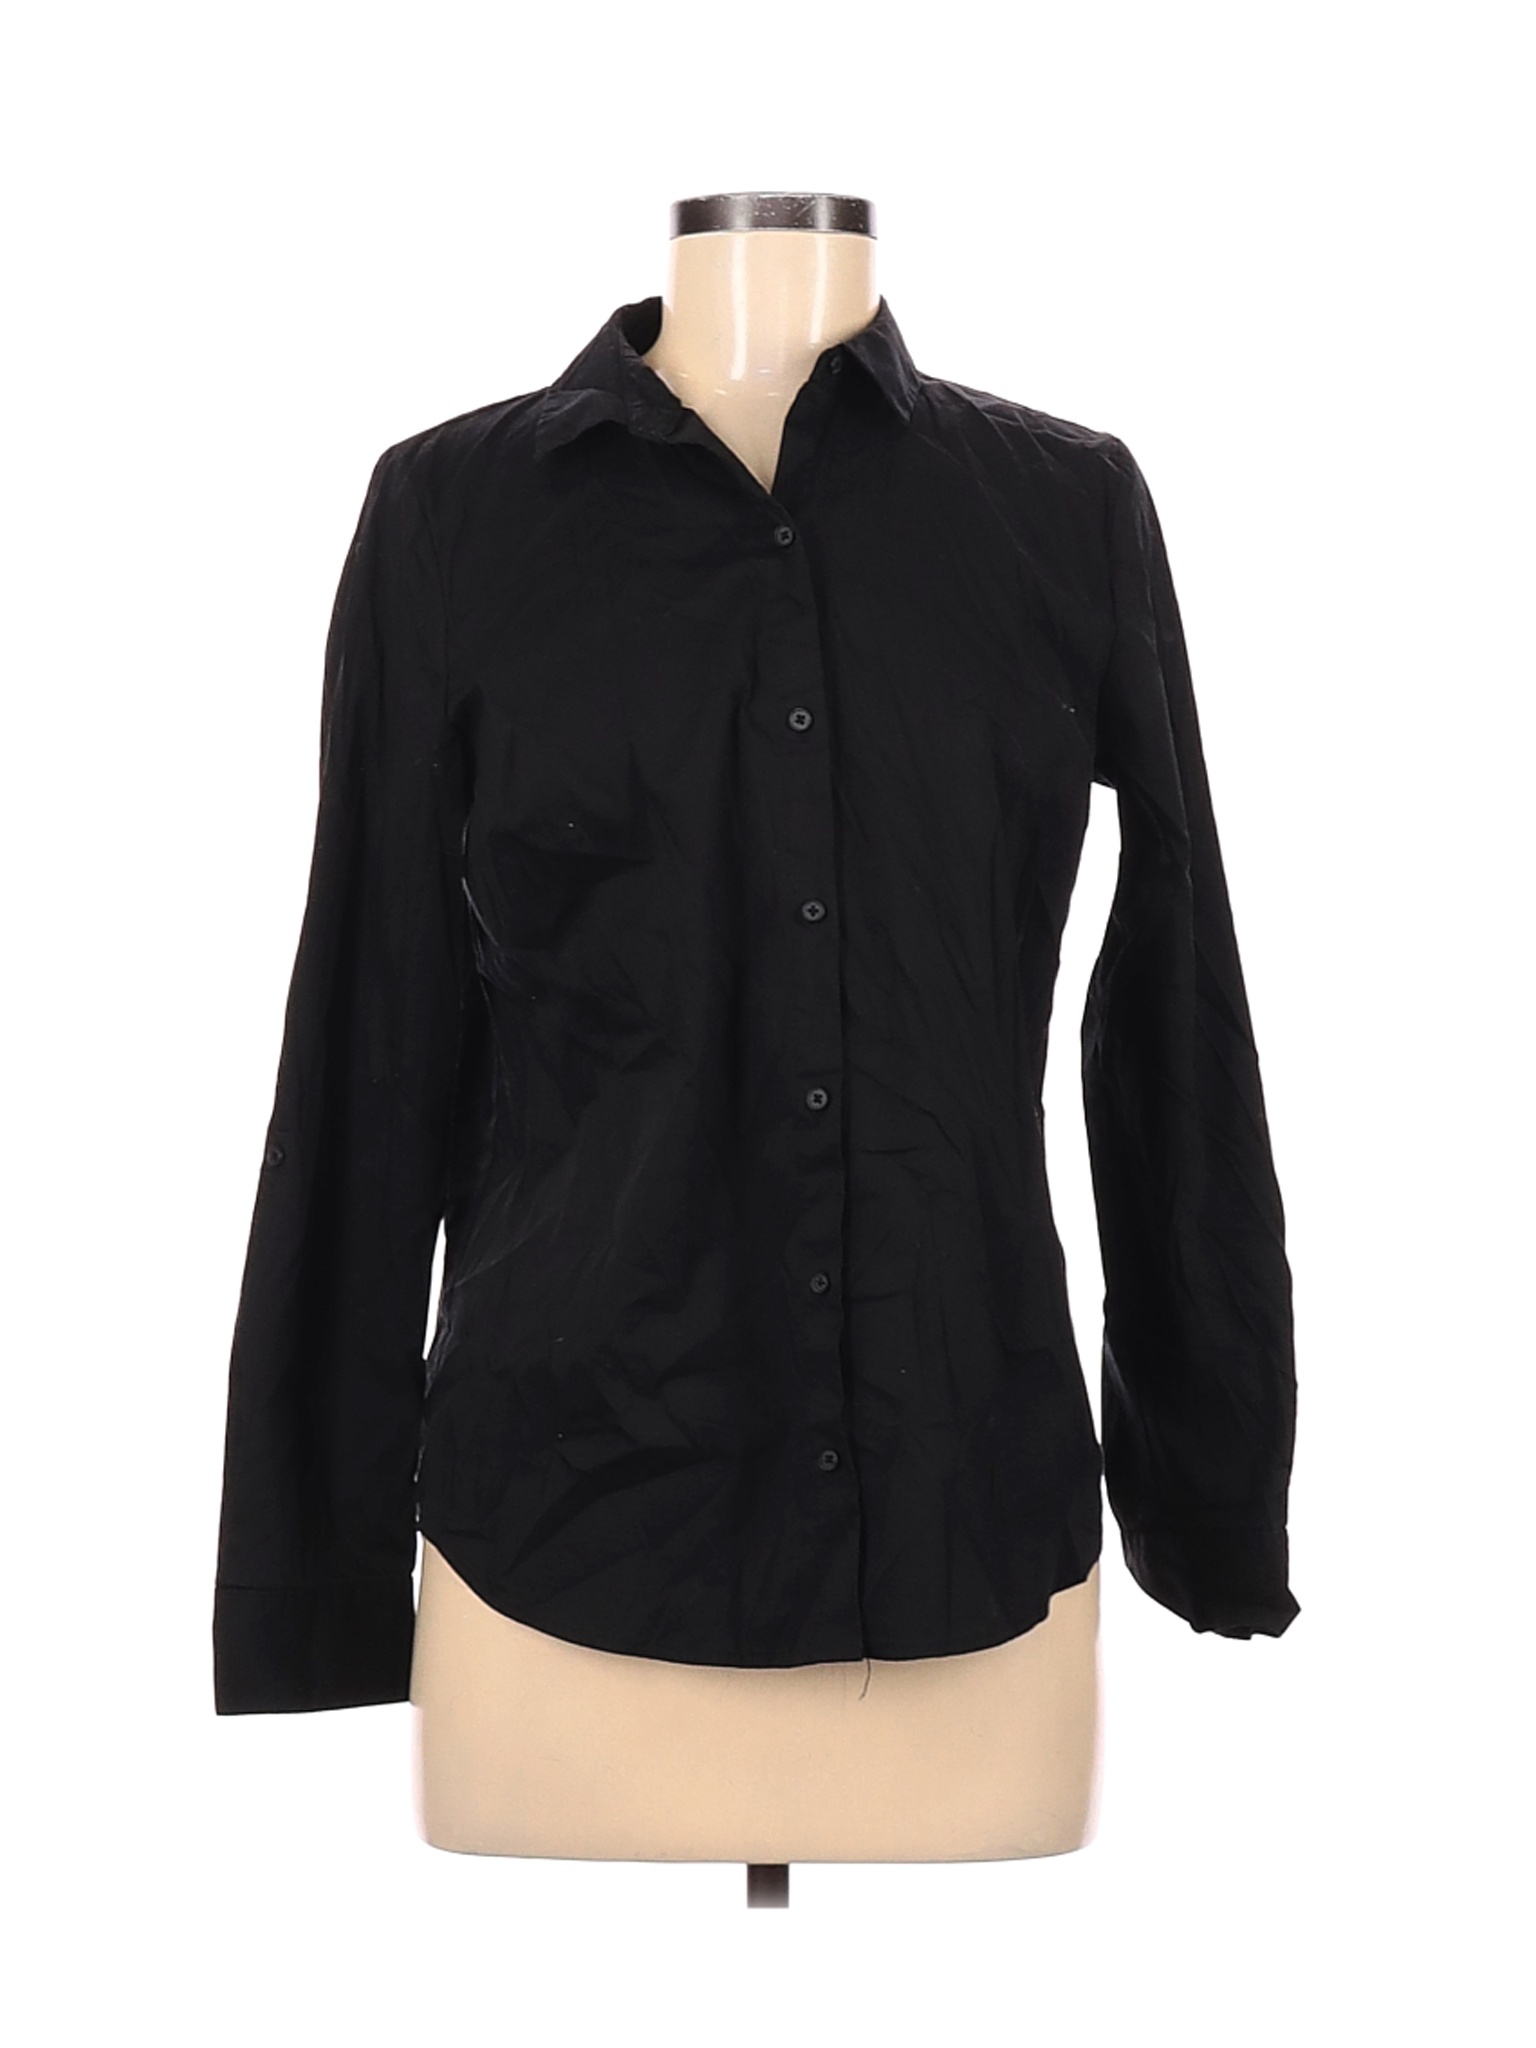 Apt. 9 Women Black Long Sleeve Button-Down Shirt M | eBay